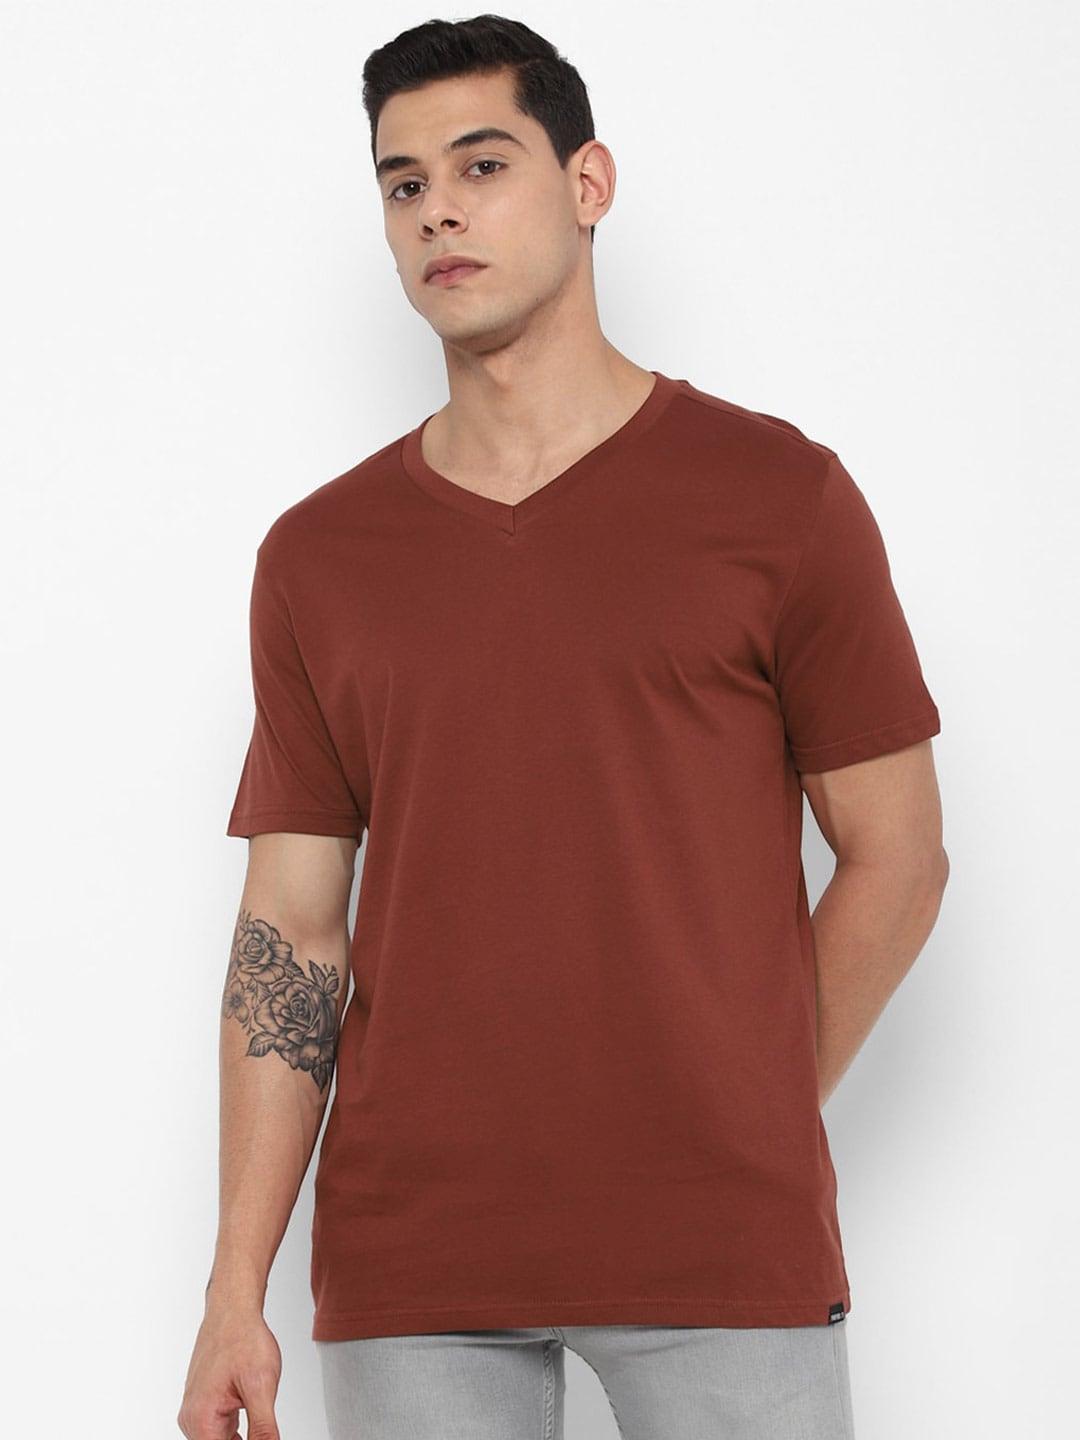 forever 21 men brown v-neck t-shirt